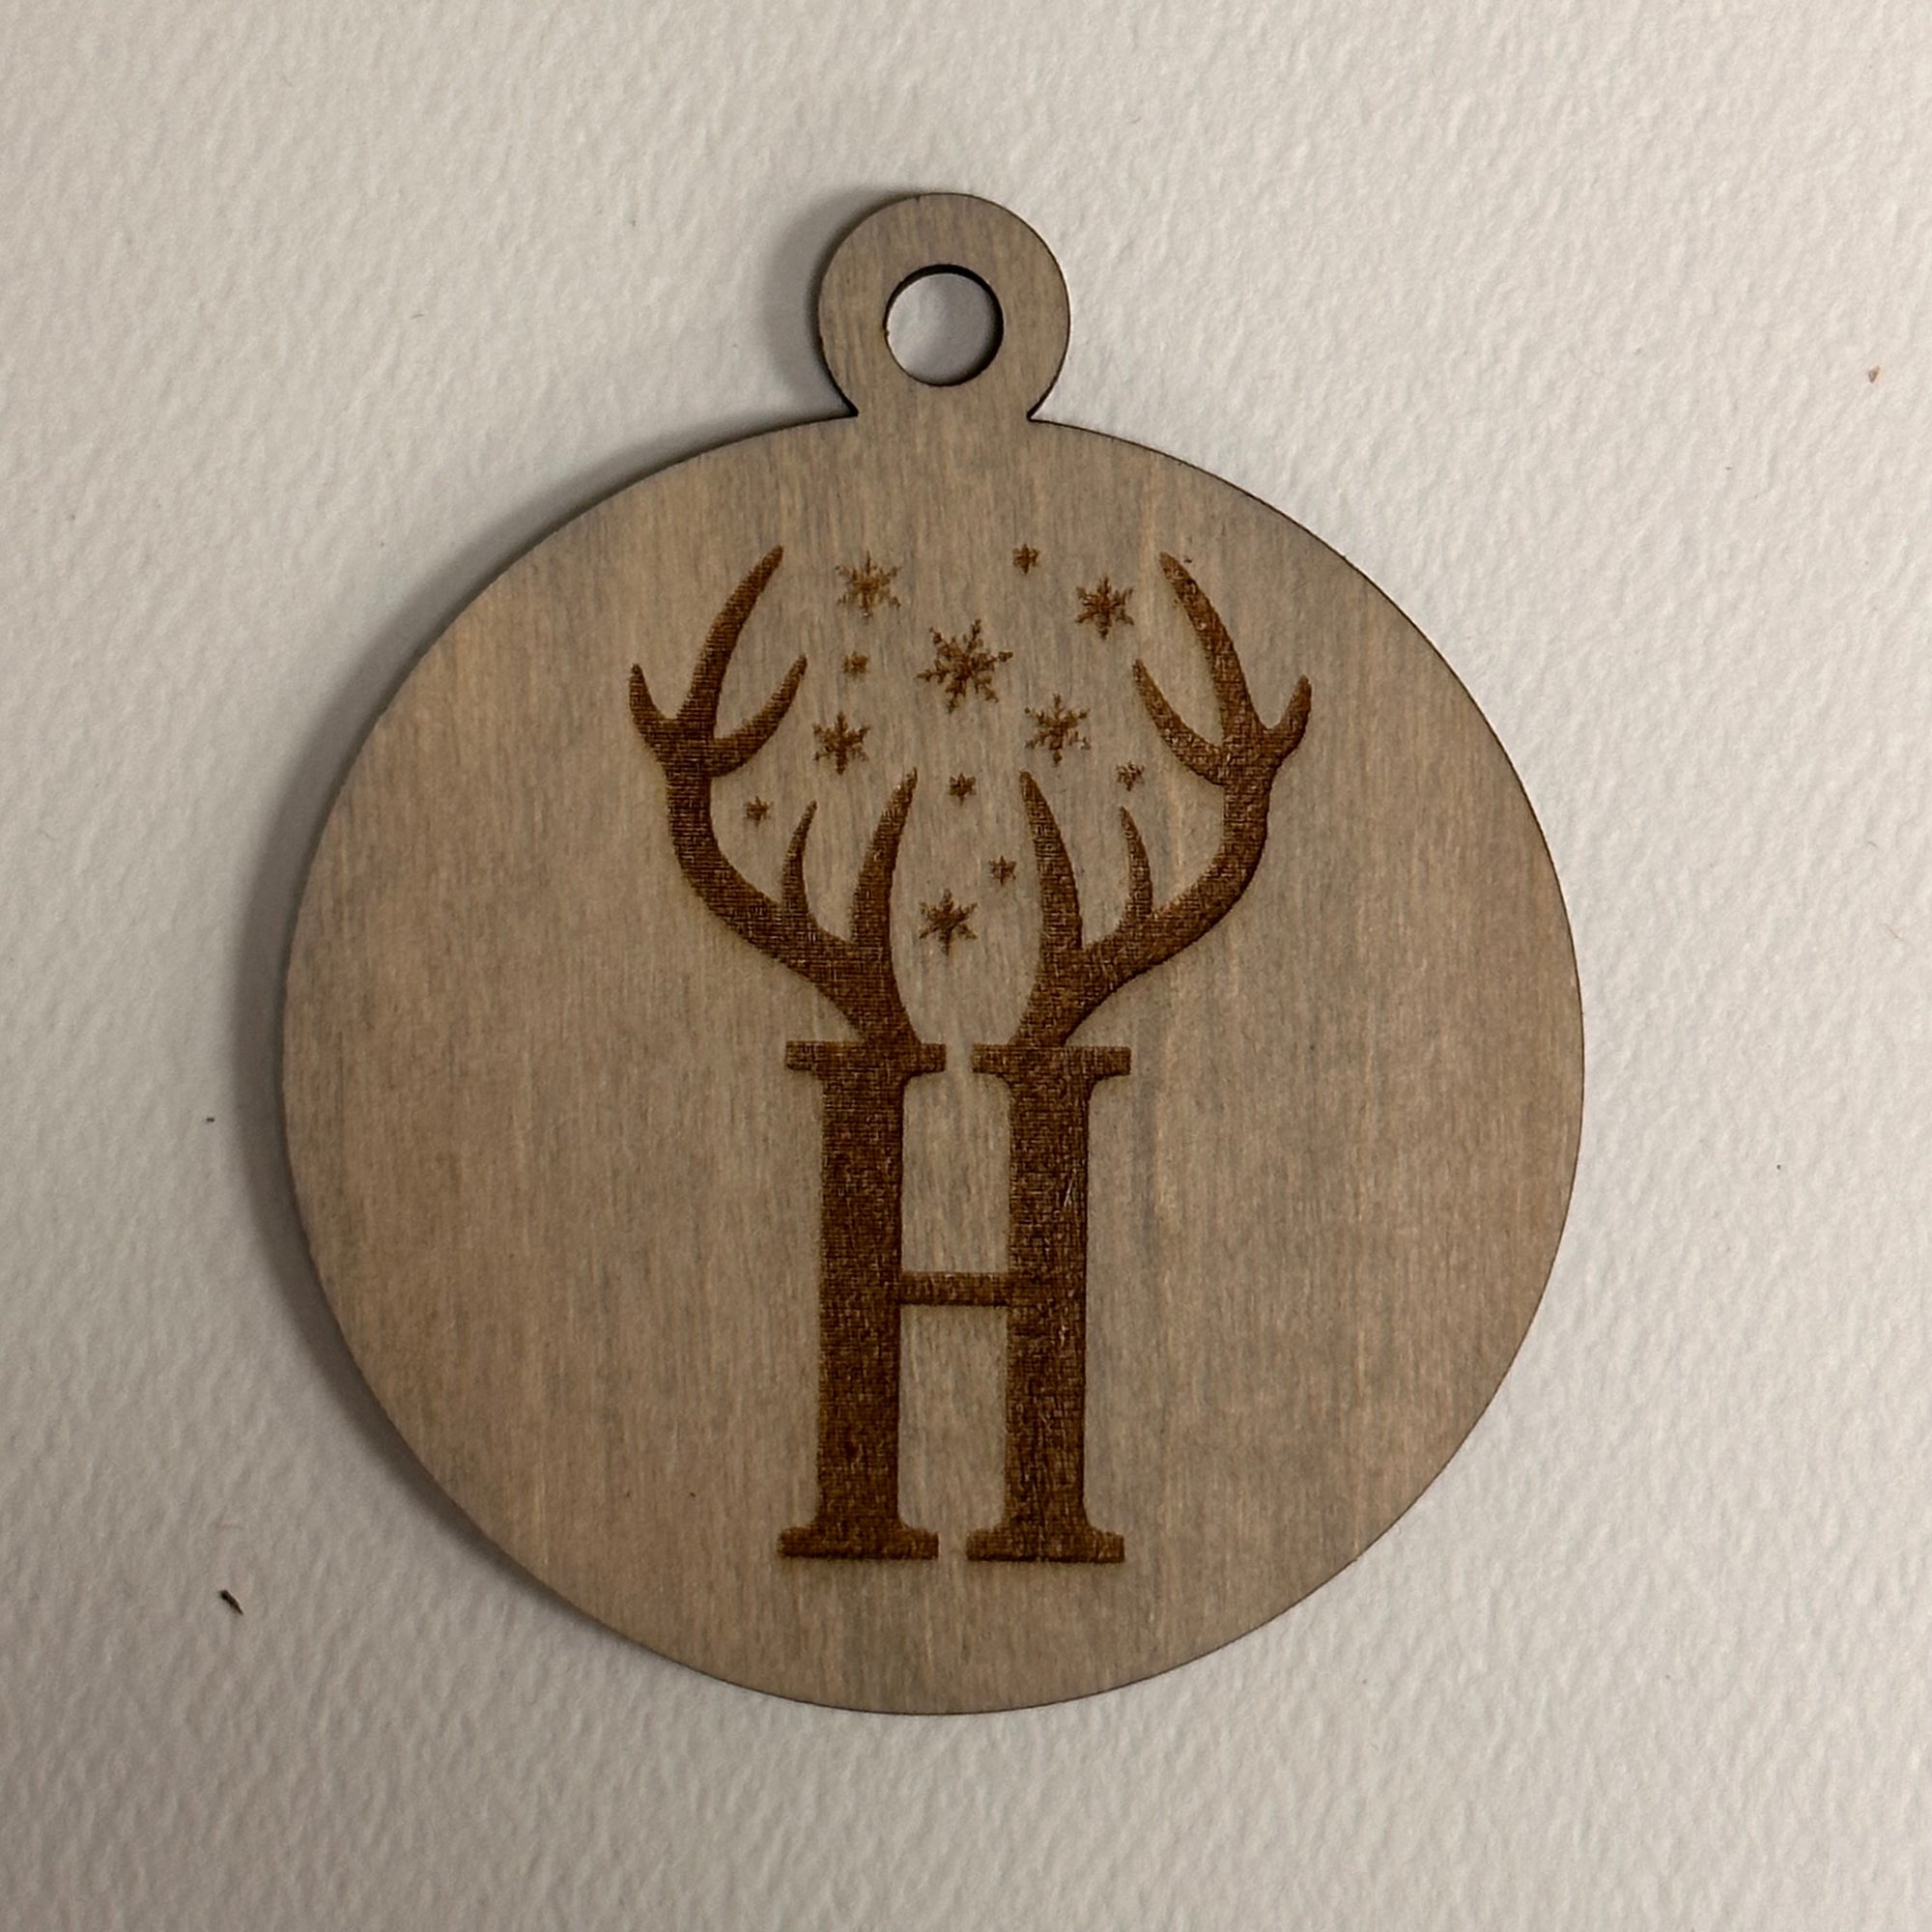 Antlers Monogram Wooden Ornaments